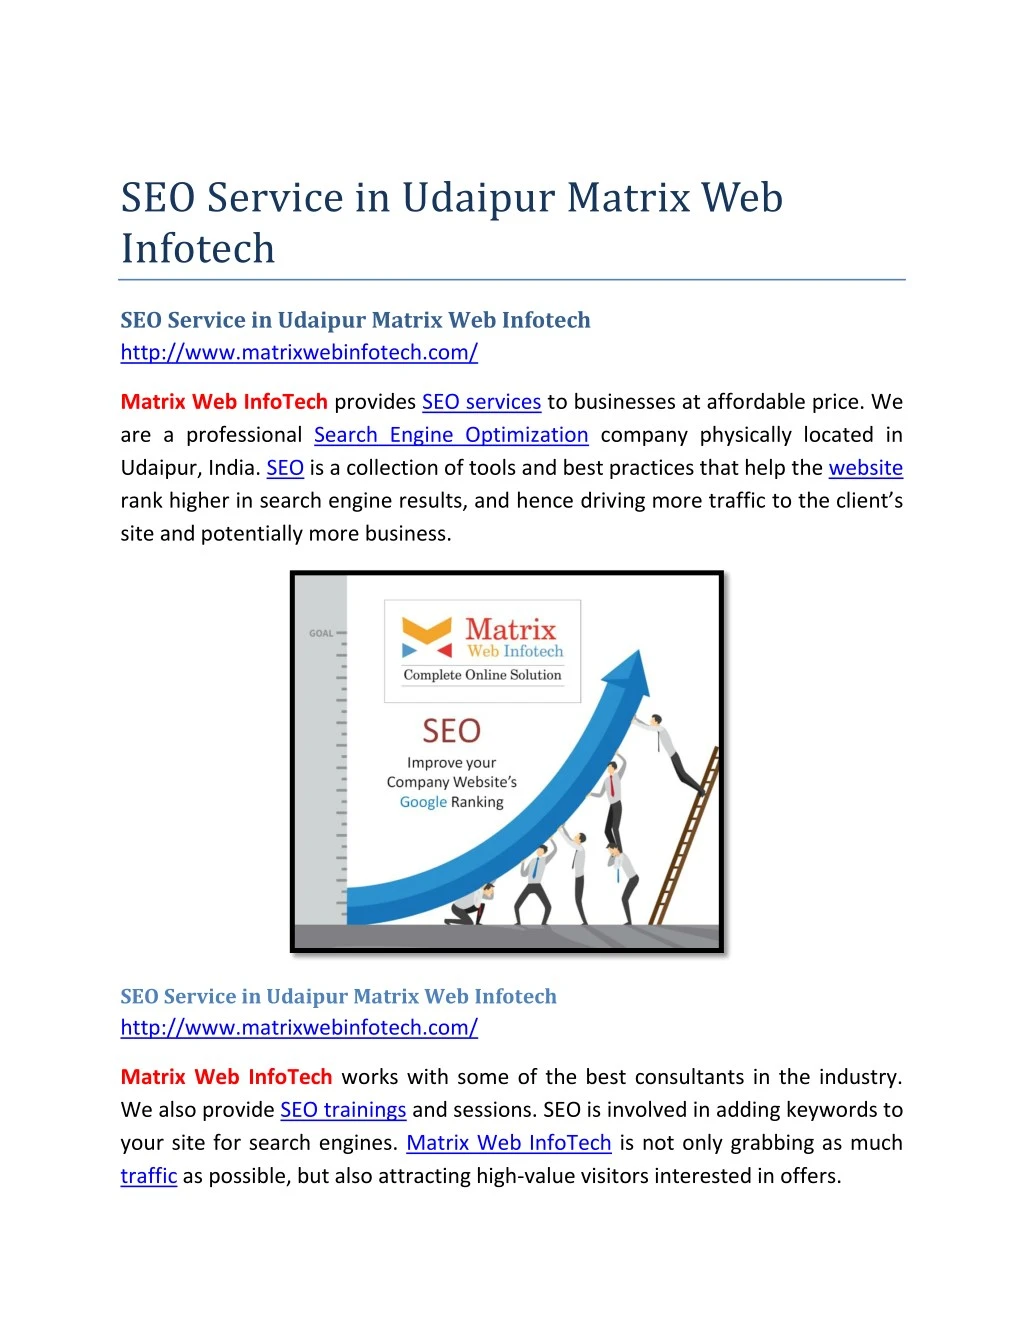 seo service in udaipur matrix web infotech